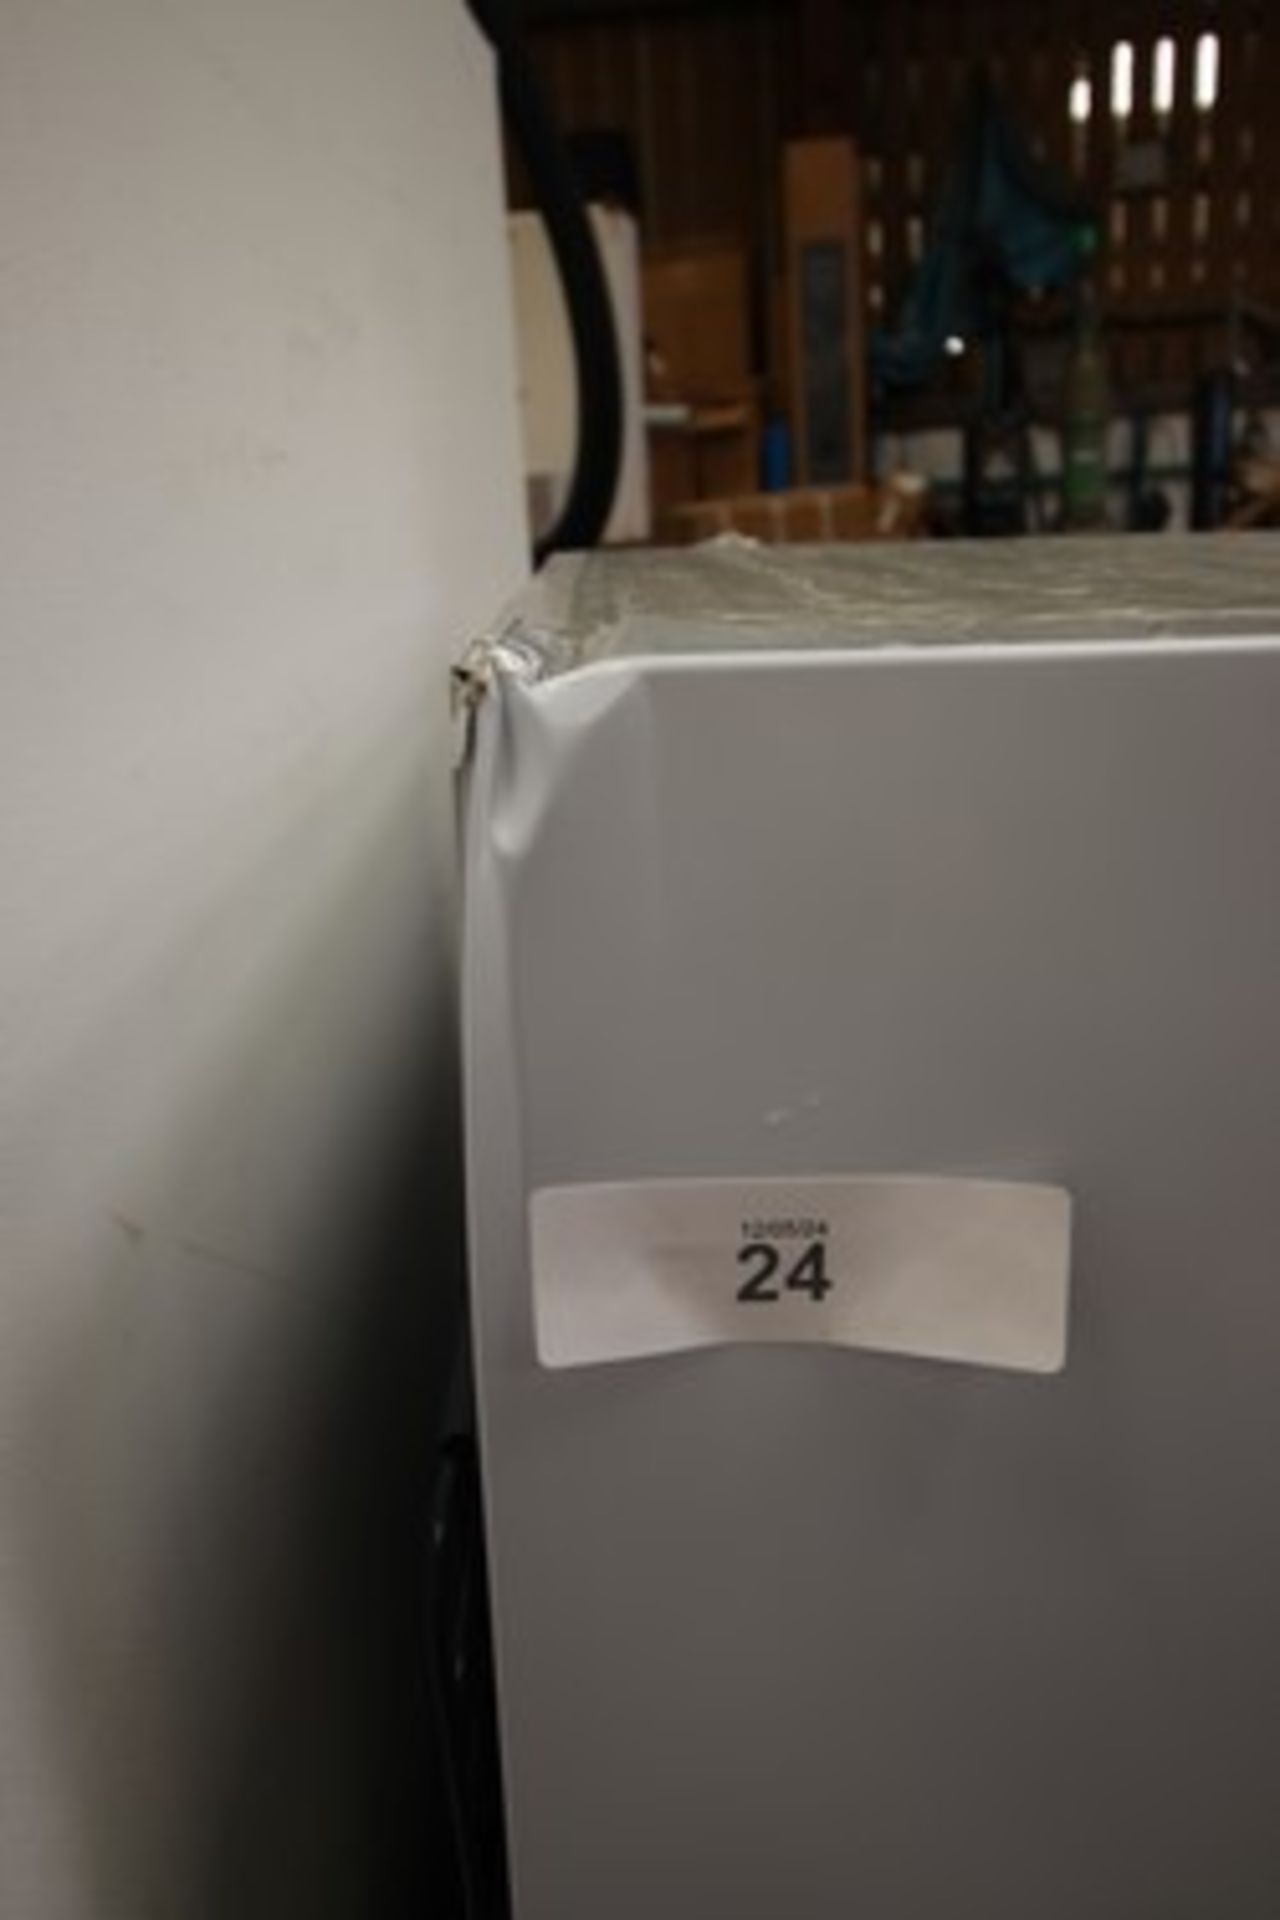 1 x CDA integrated freezer, model No: FW881/4, dented front top panel, dented rear left corner, - Image 3 of 6